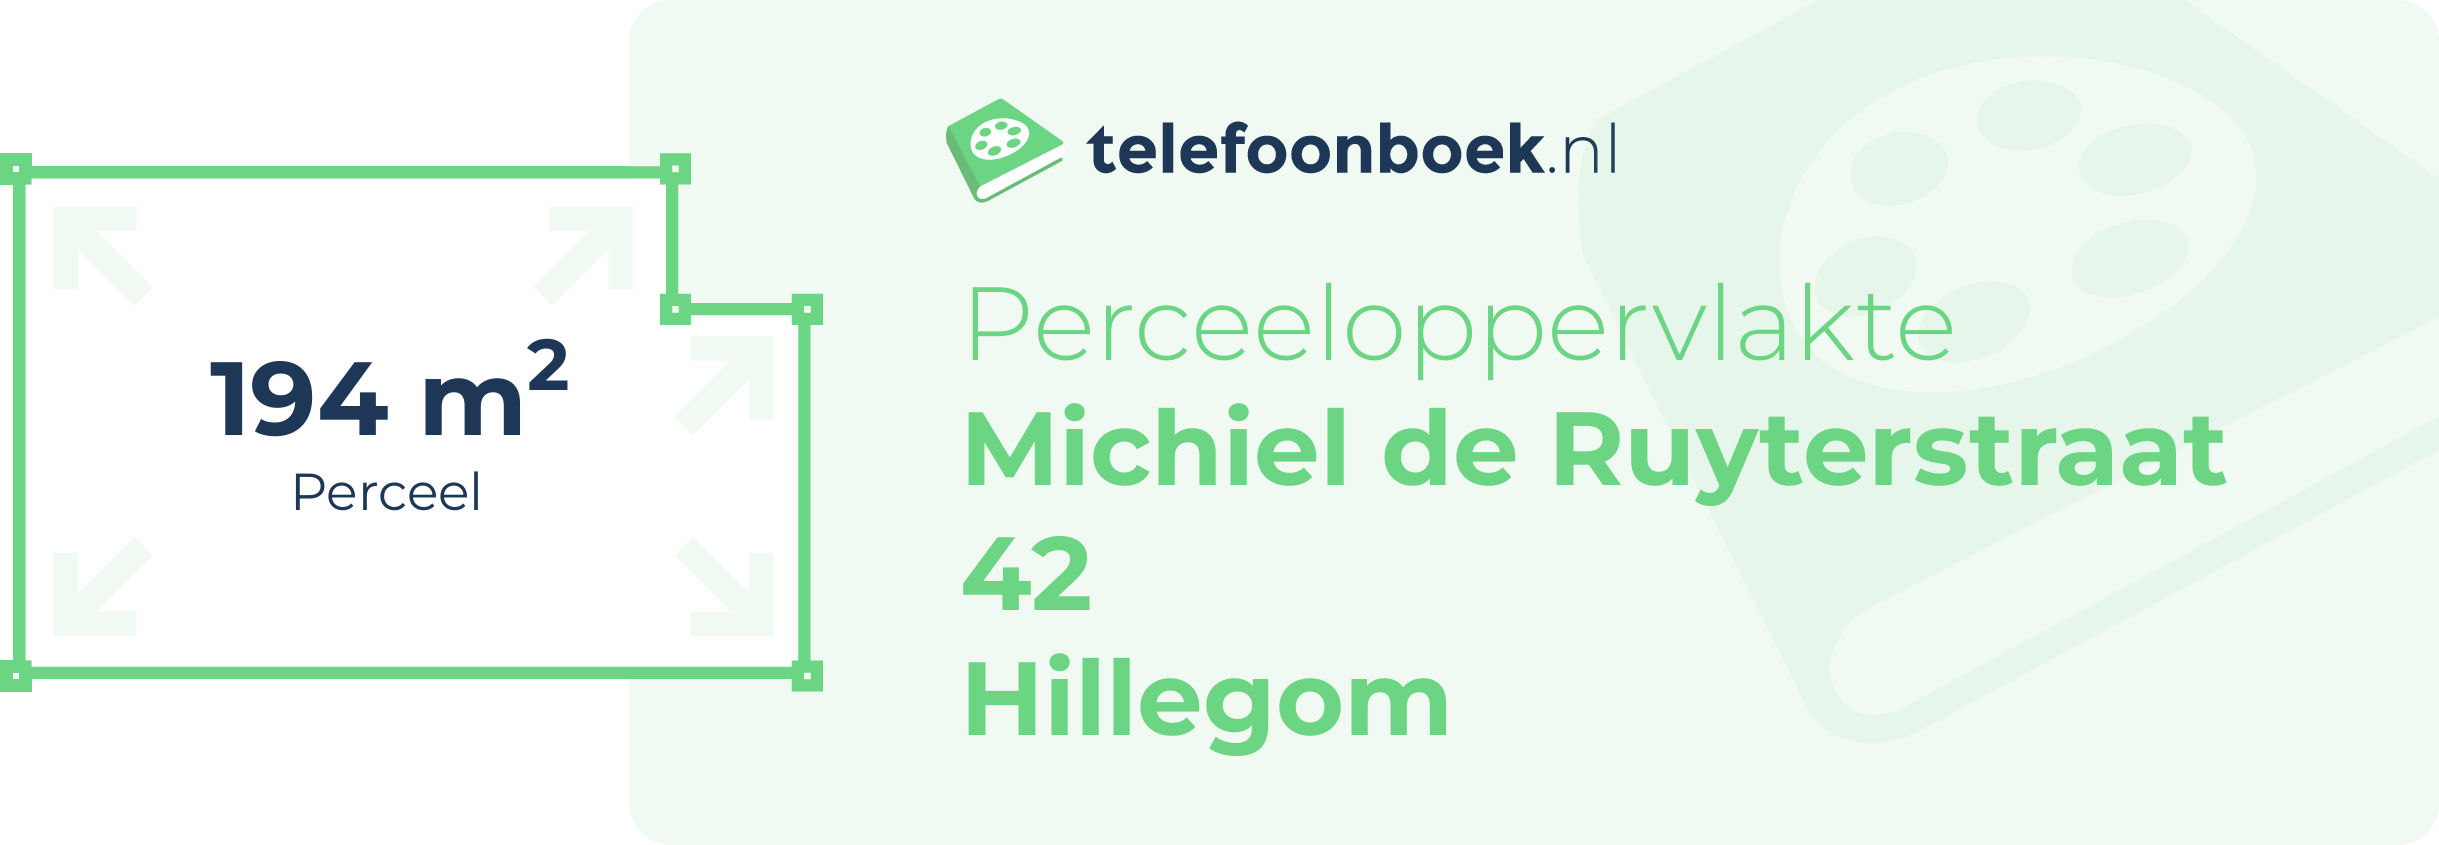 Perceeloppervlakte Michiel De Ruyterstraat 42 Hillegom